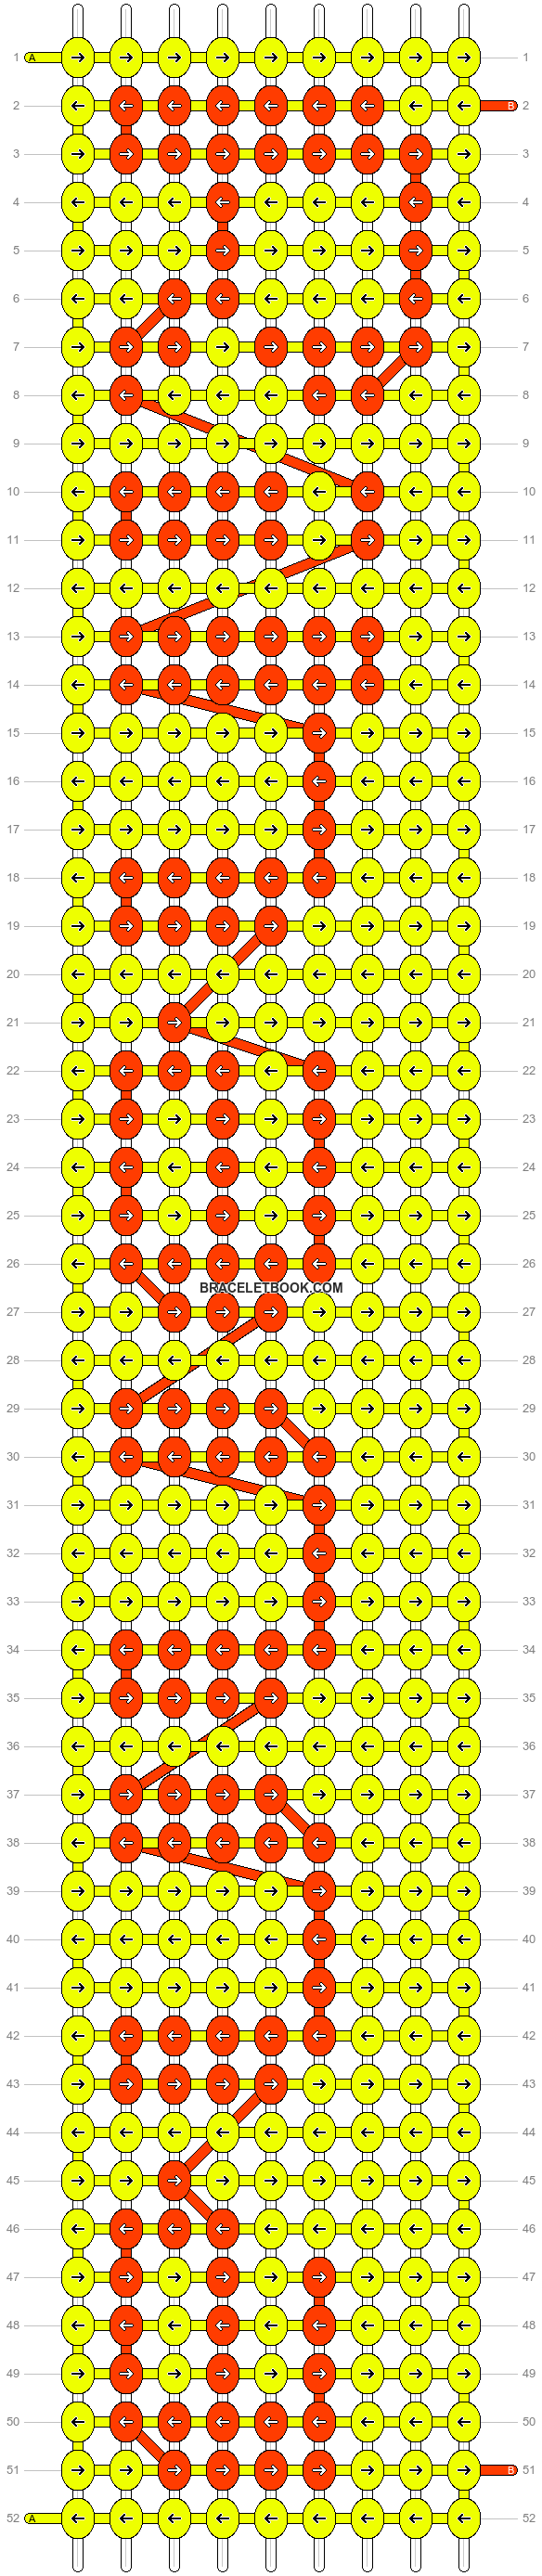 Alpha pattern #555 variation #41261 pattern